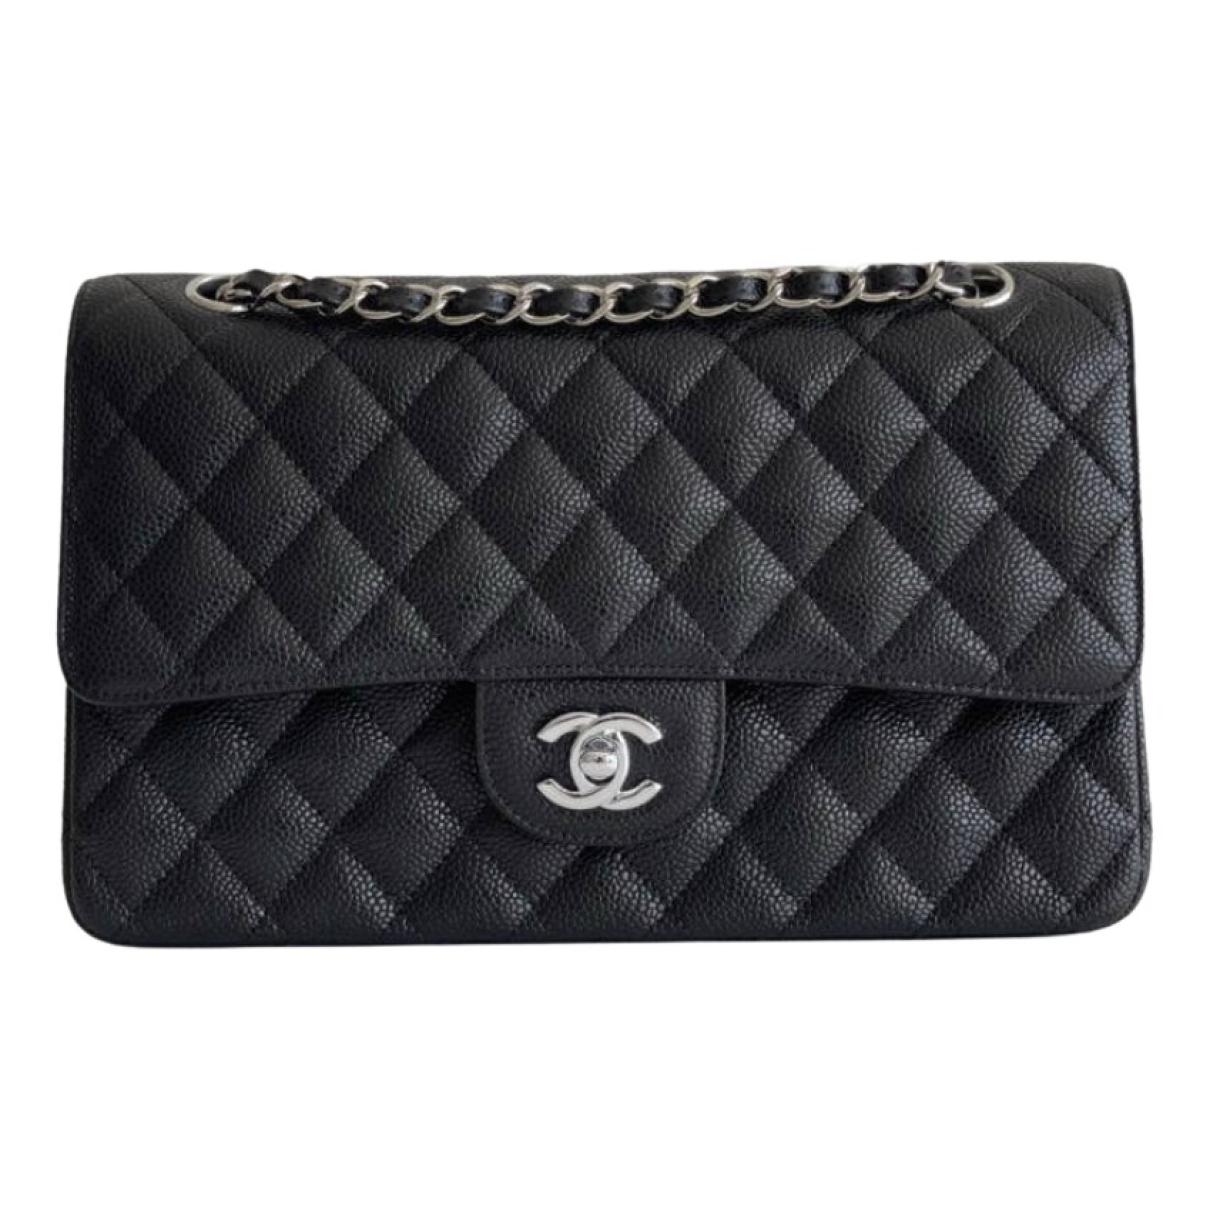 Leather handbag Chanel Black in Leather - 31826276